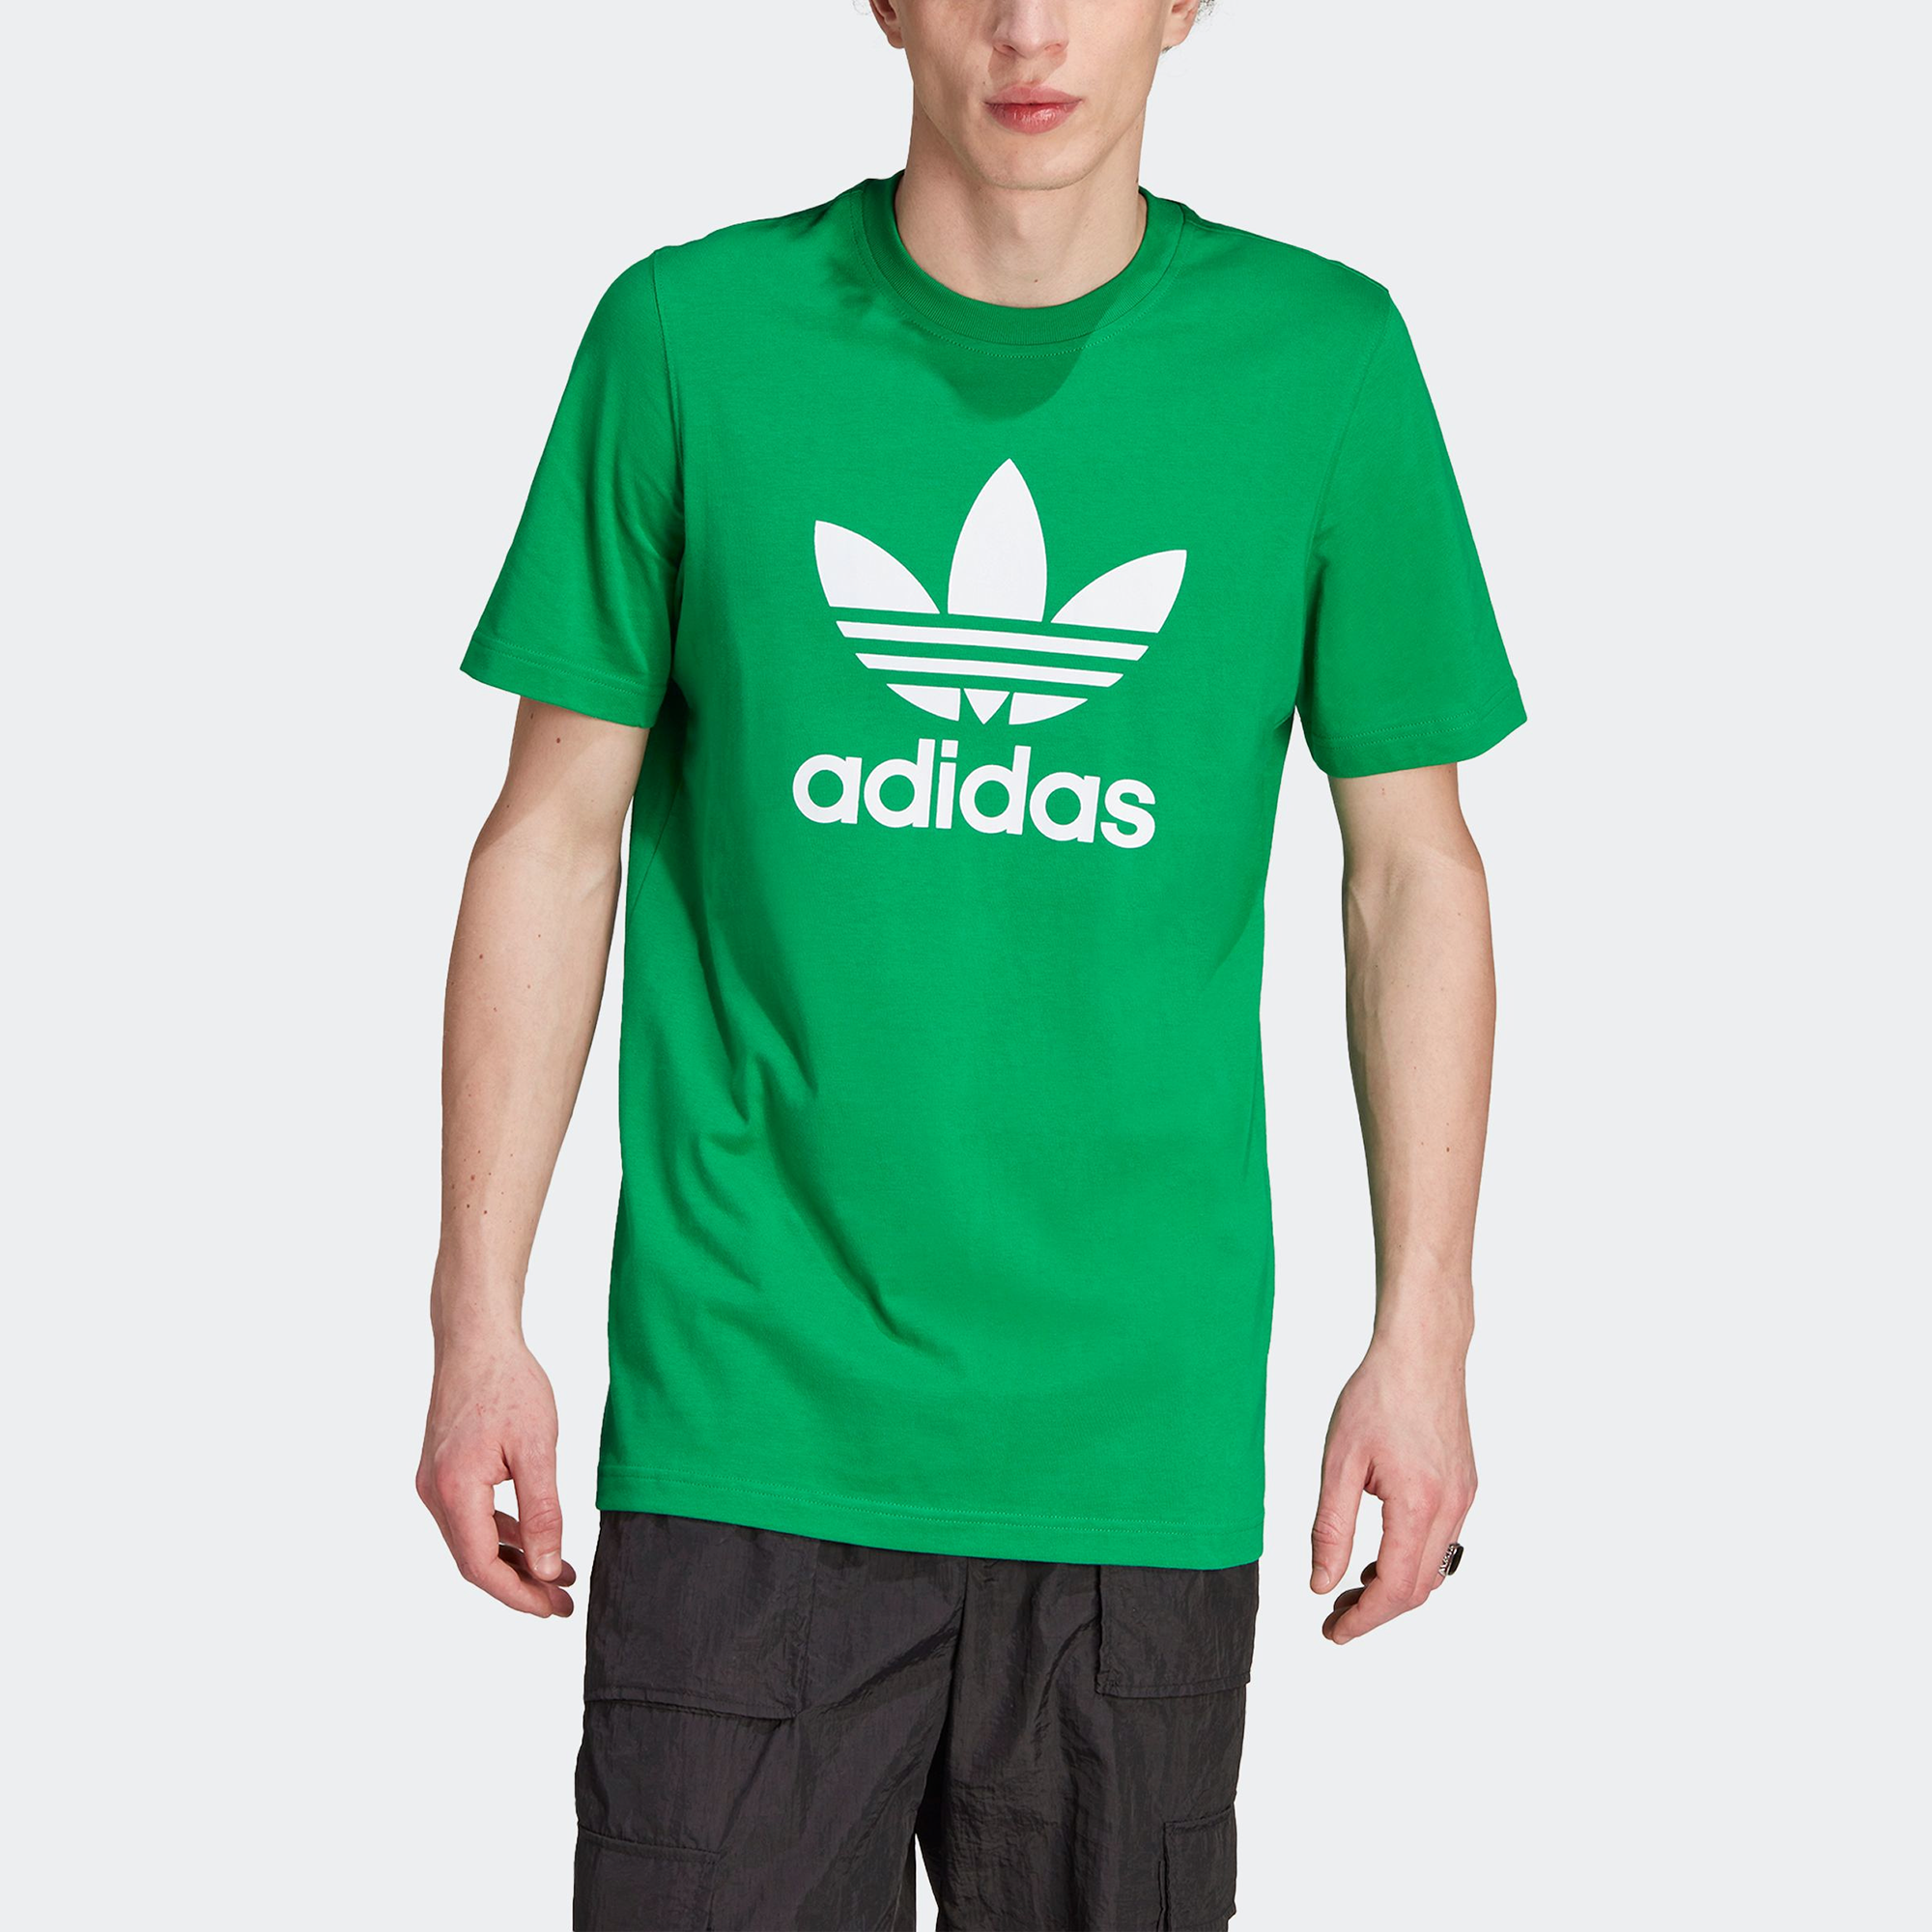 adidas Originals Big Trefoil S/S T-Shirt | Foot Locker